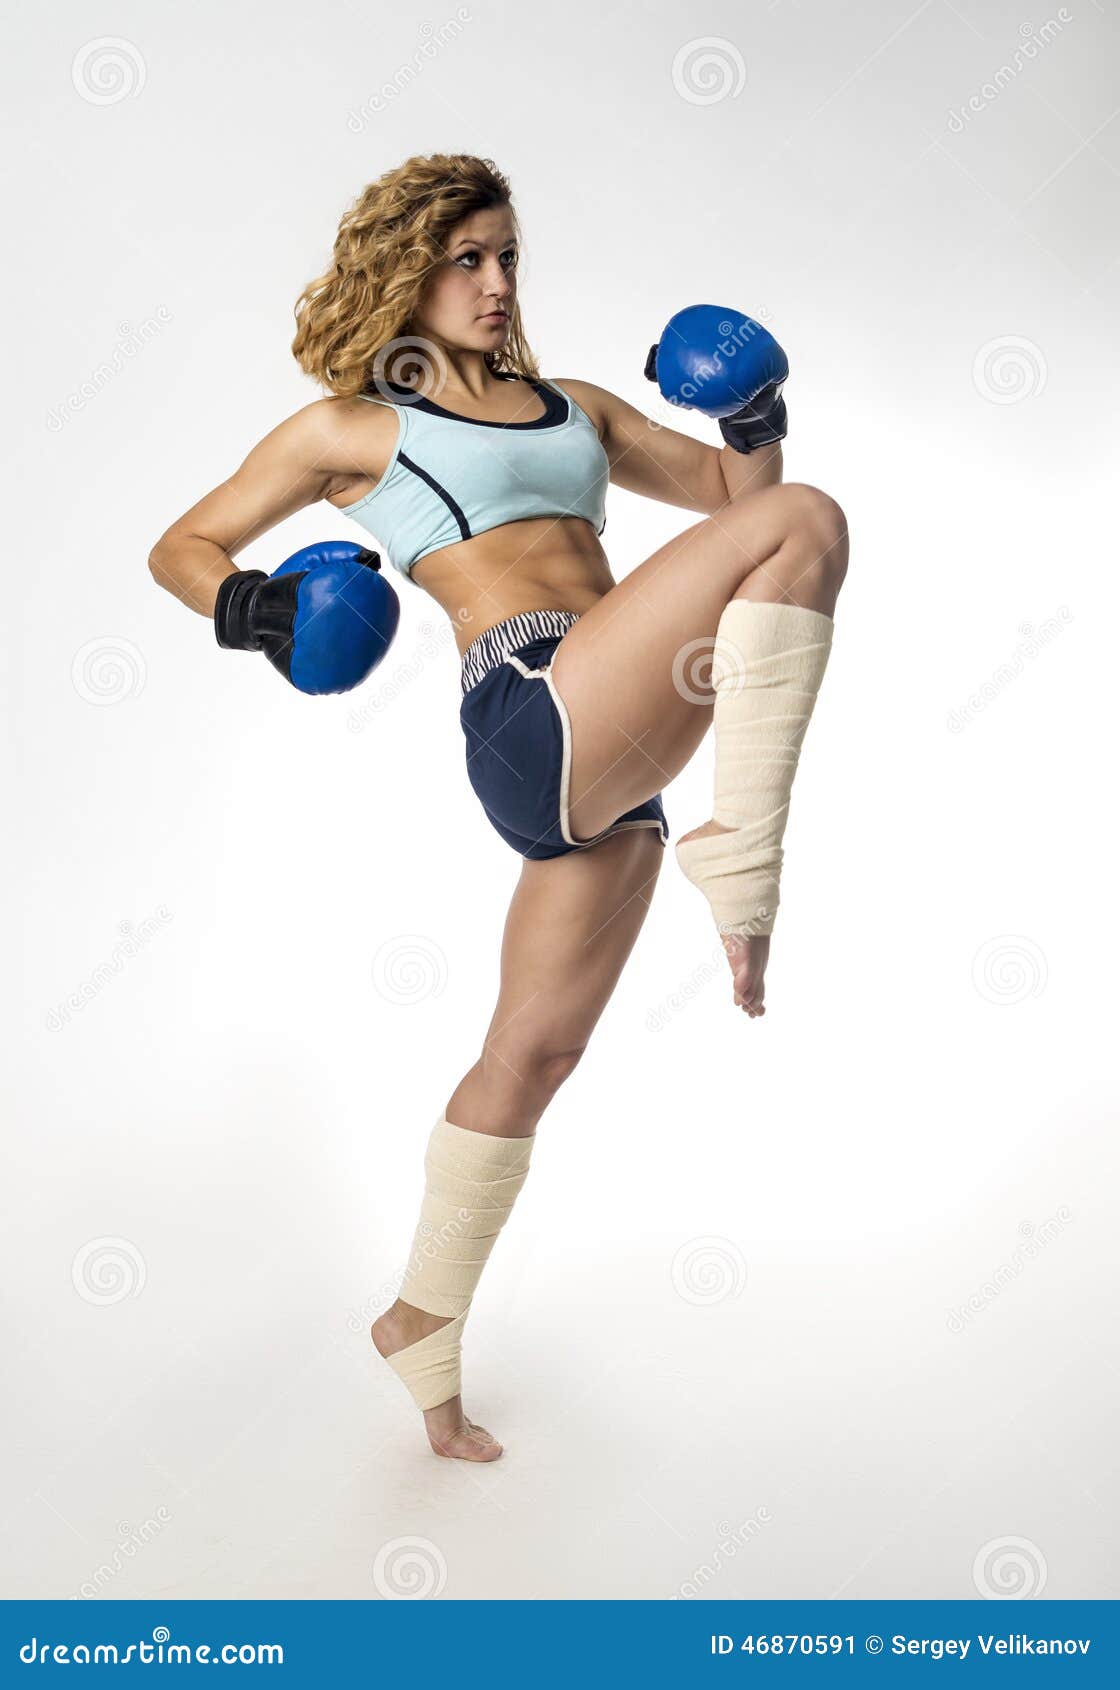 1,373 Girl Kickboxer Stock Photos